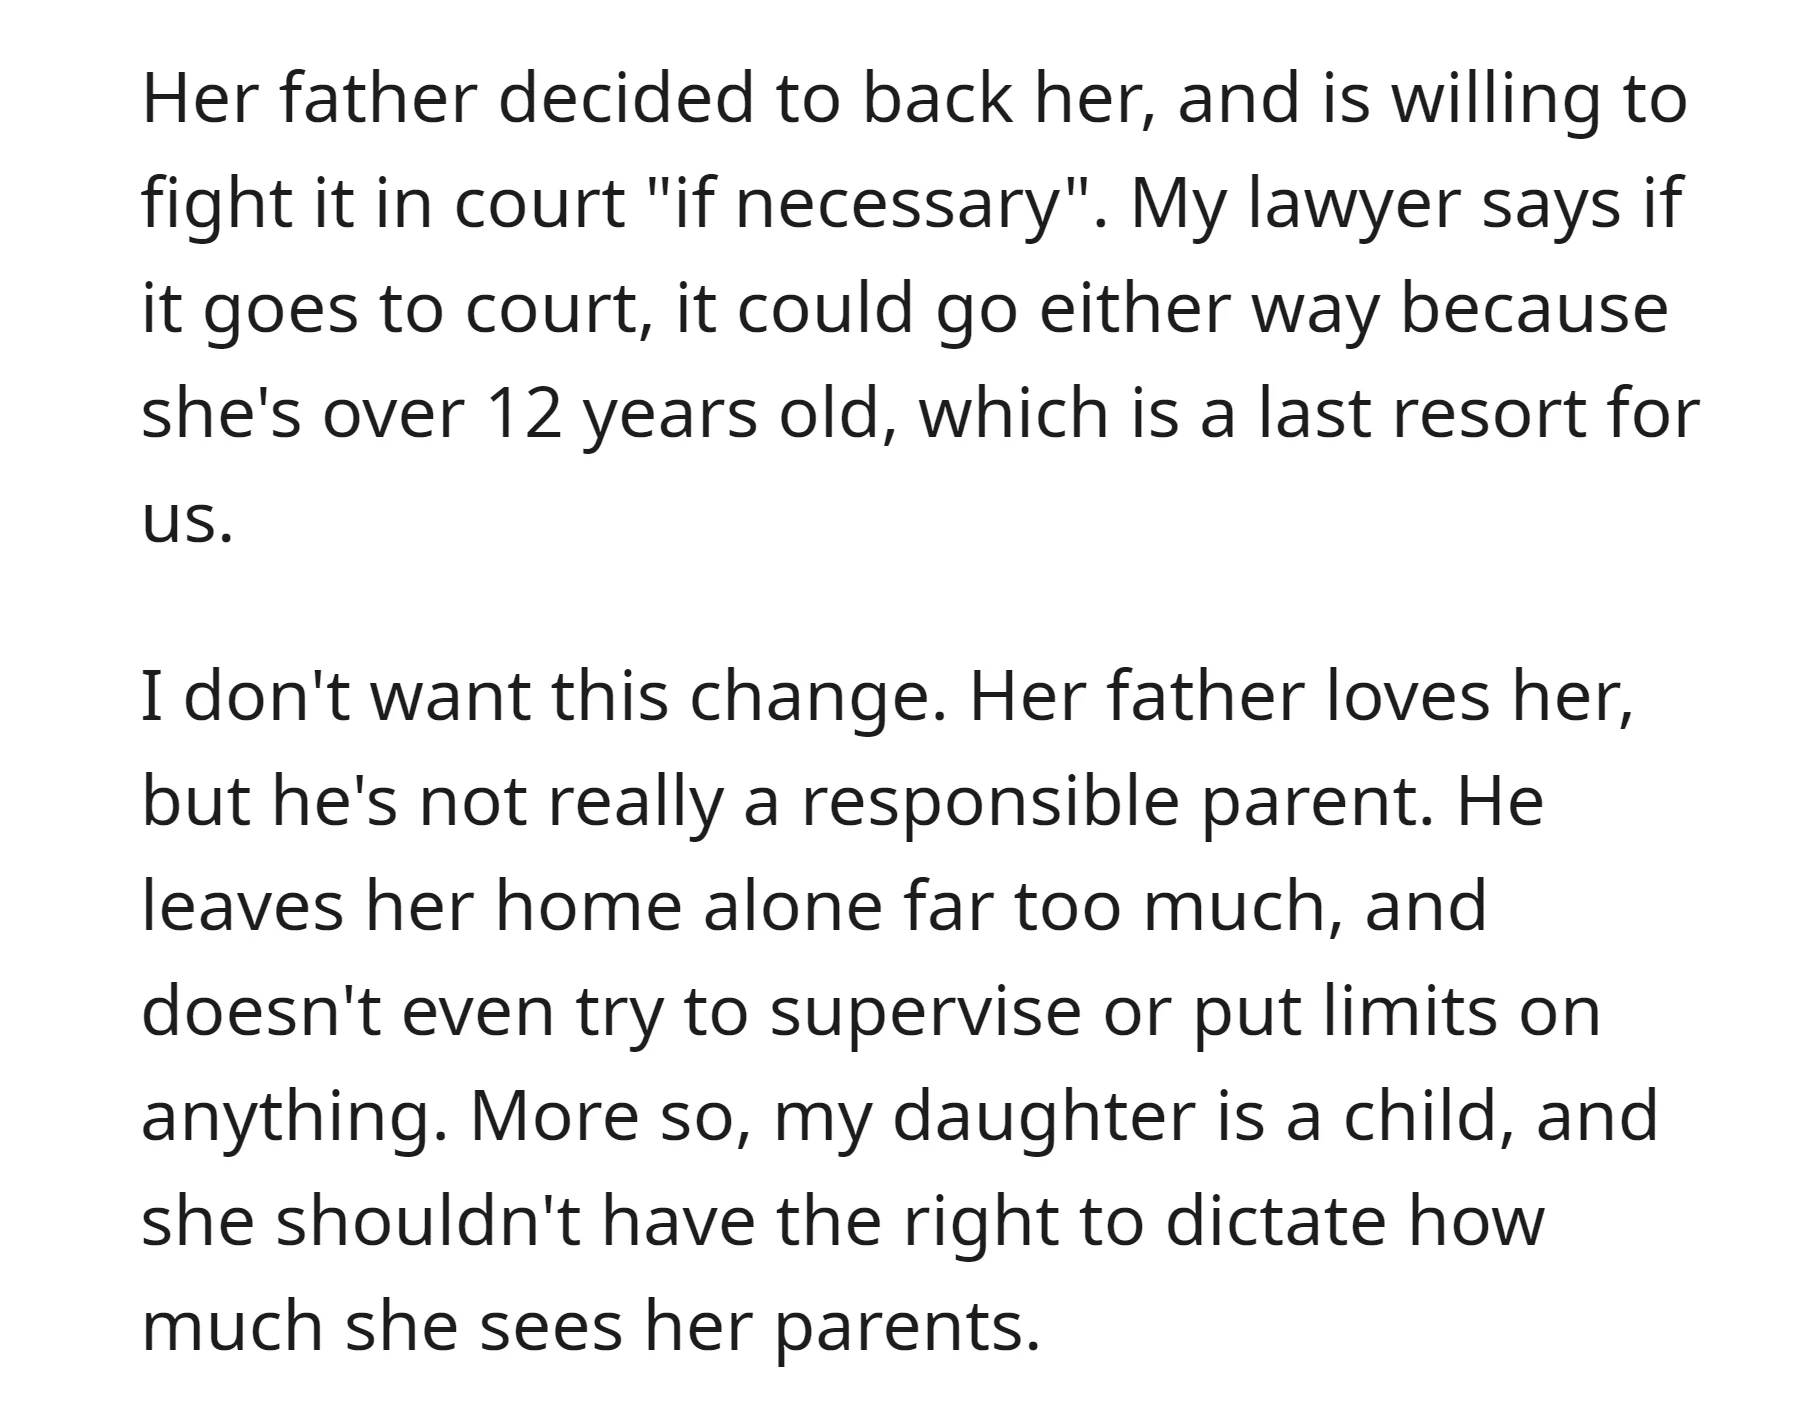 Her ex-husband wanted to change custody